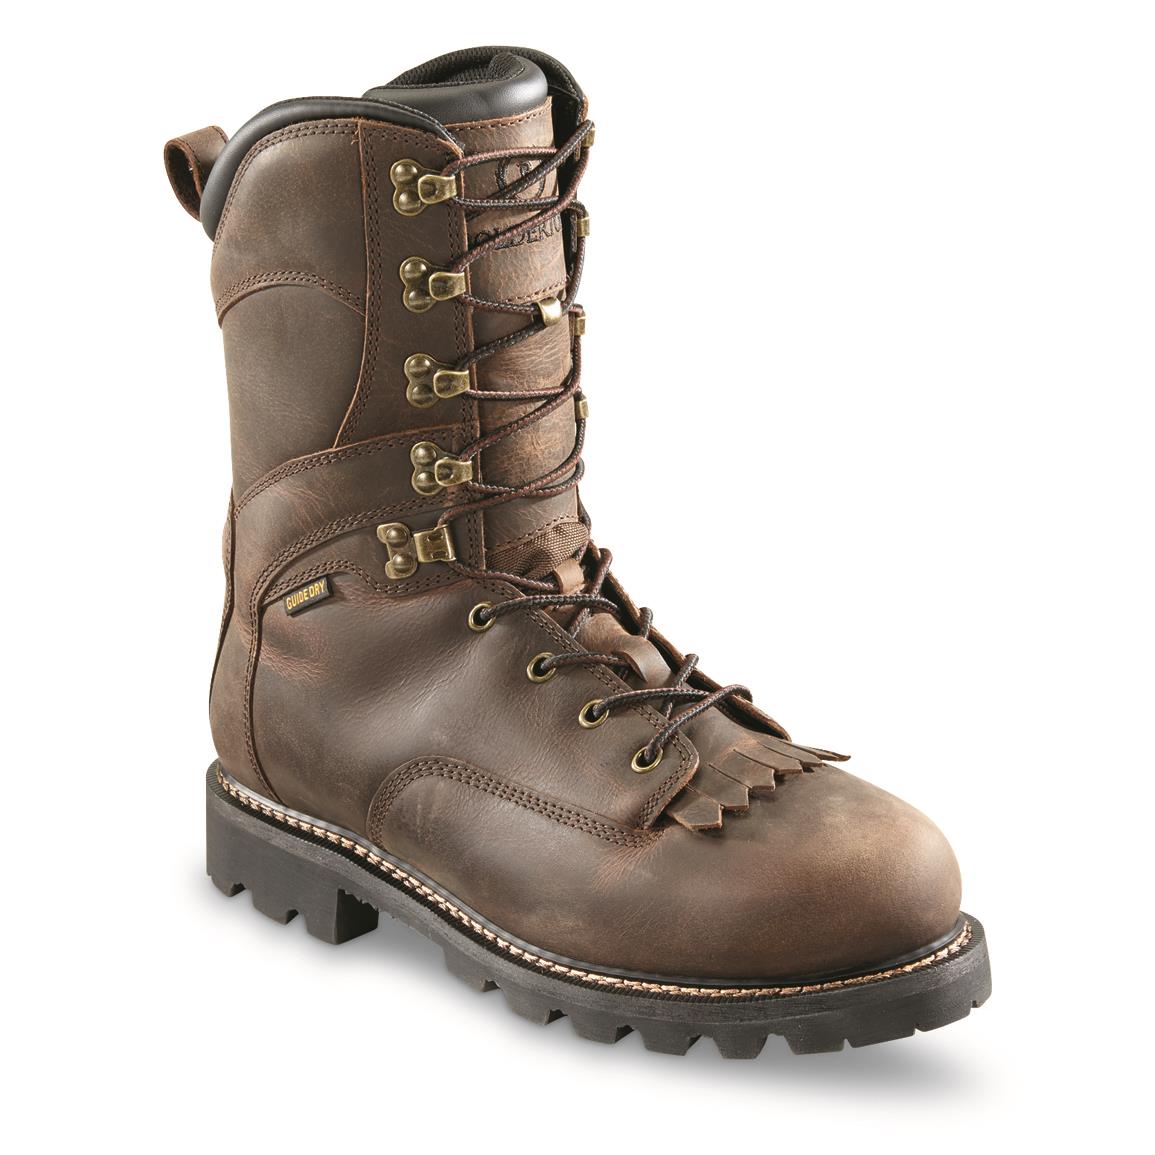 Bolderton Men's Outlands 10" Waterproof Insulated Hunting Boots, 800-gram, Brown